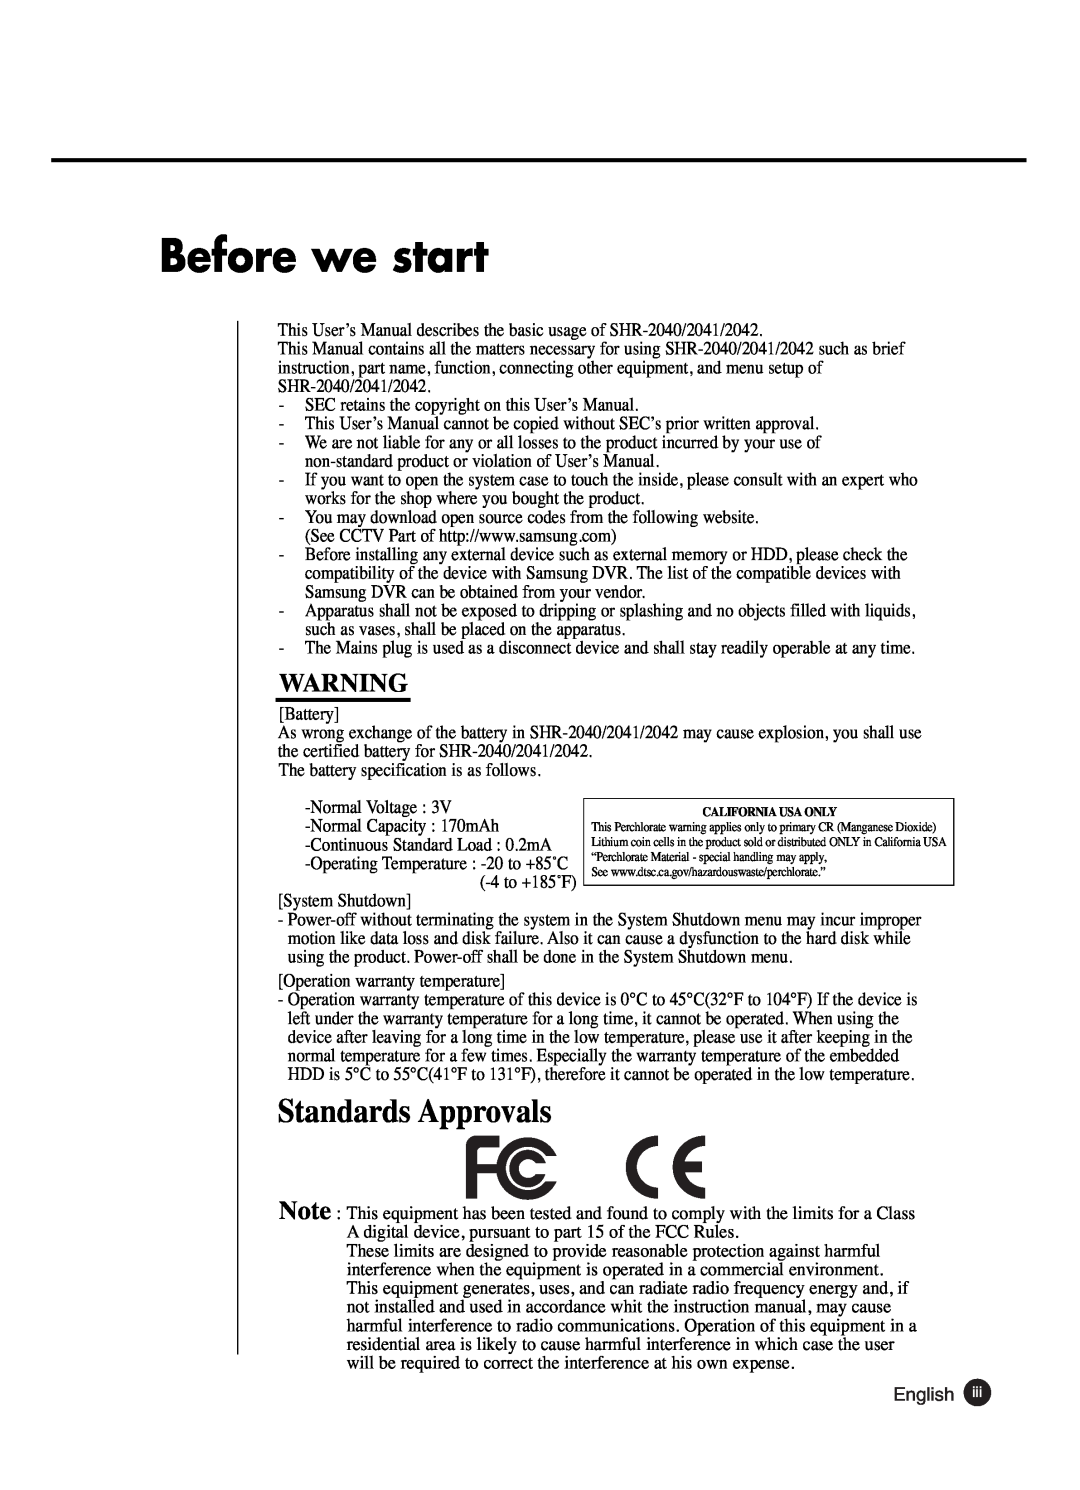 Samsung SHR-2042P250, SHR-2040P250 manual Before we start, English, Standards Approvals 